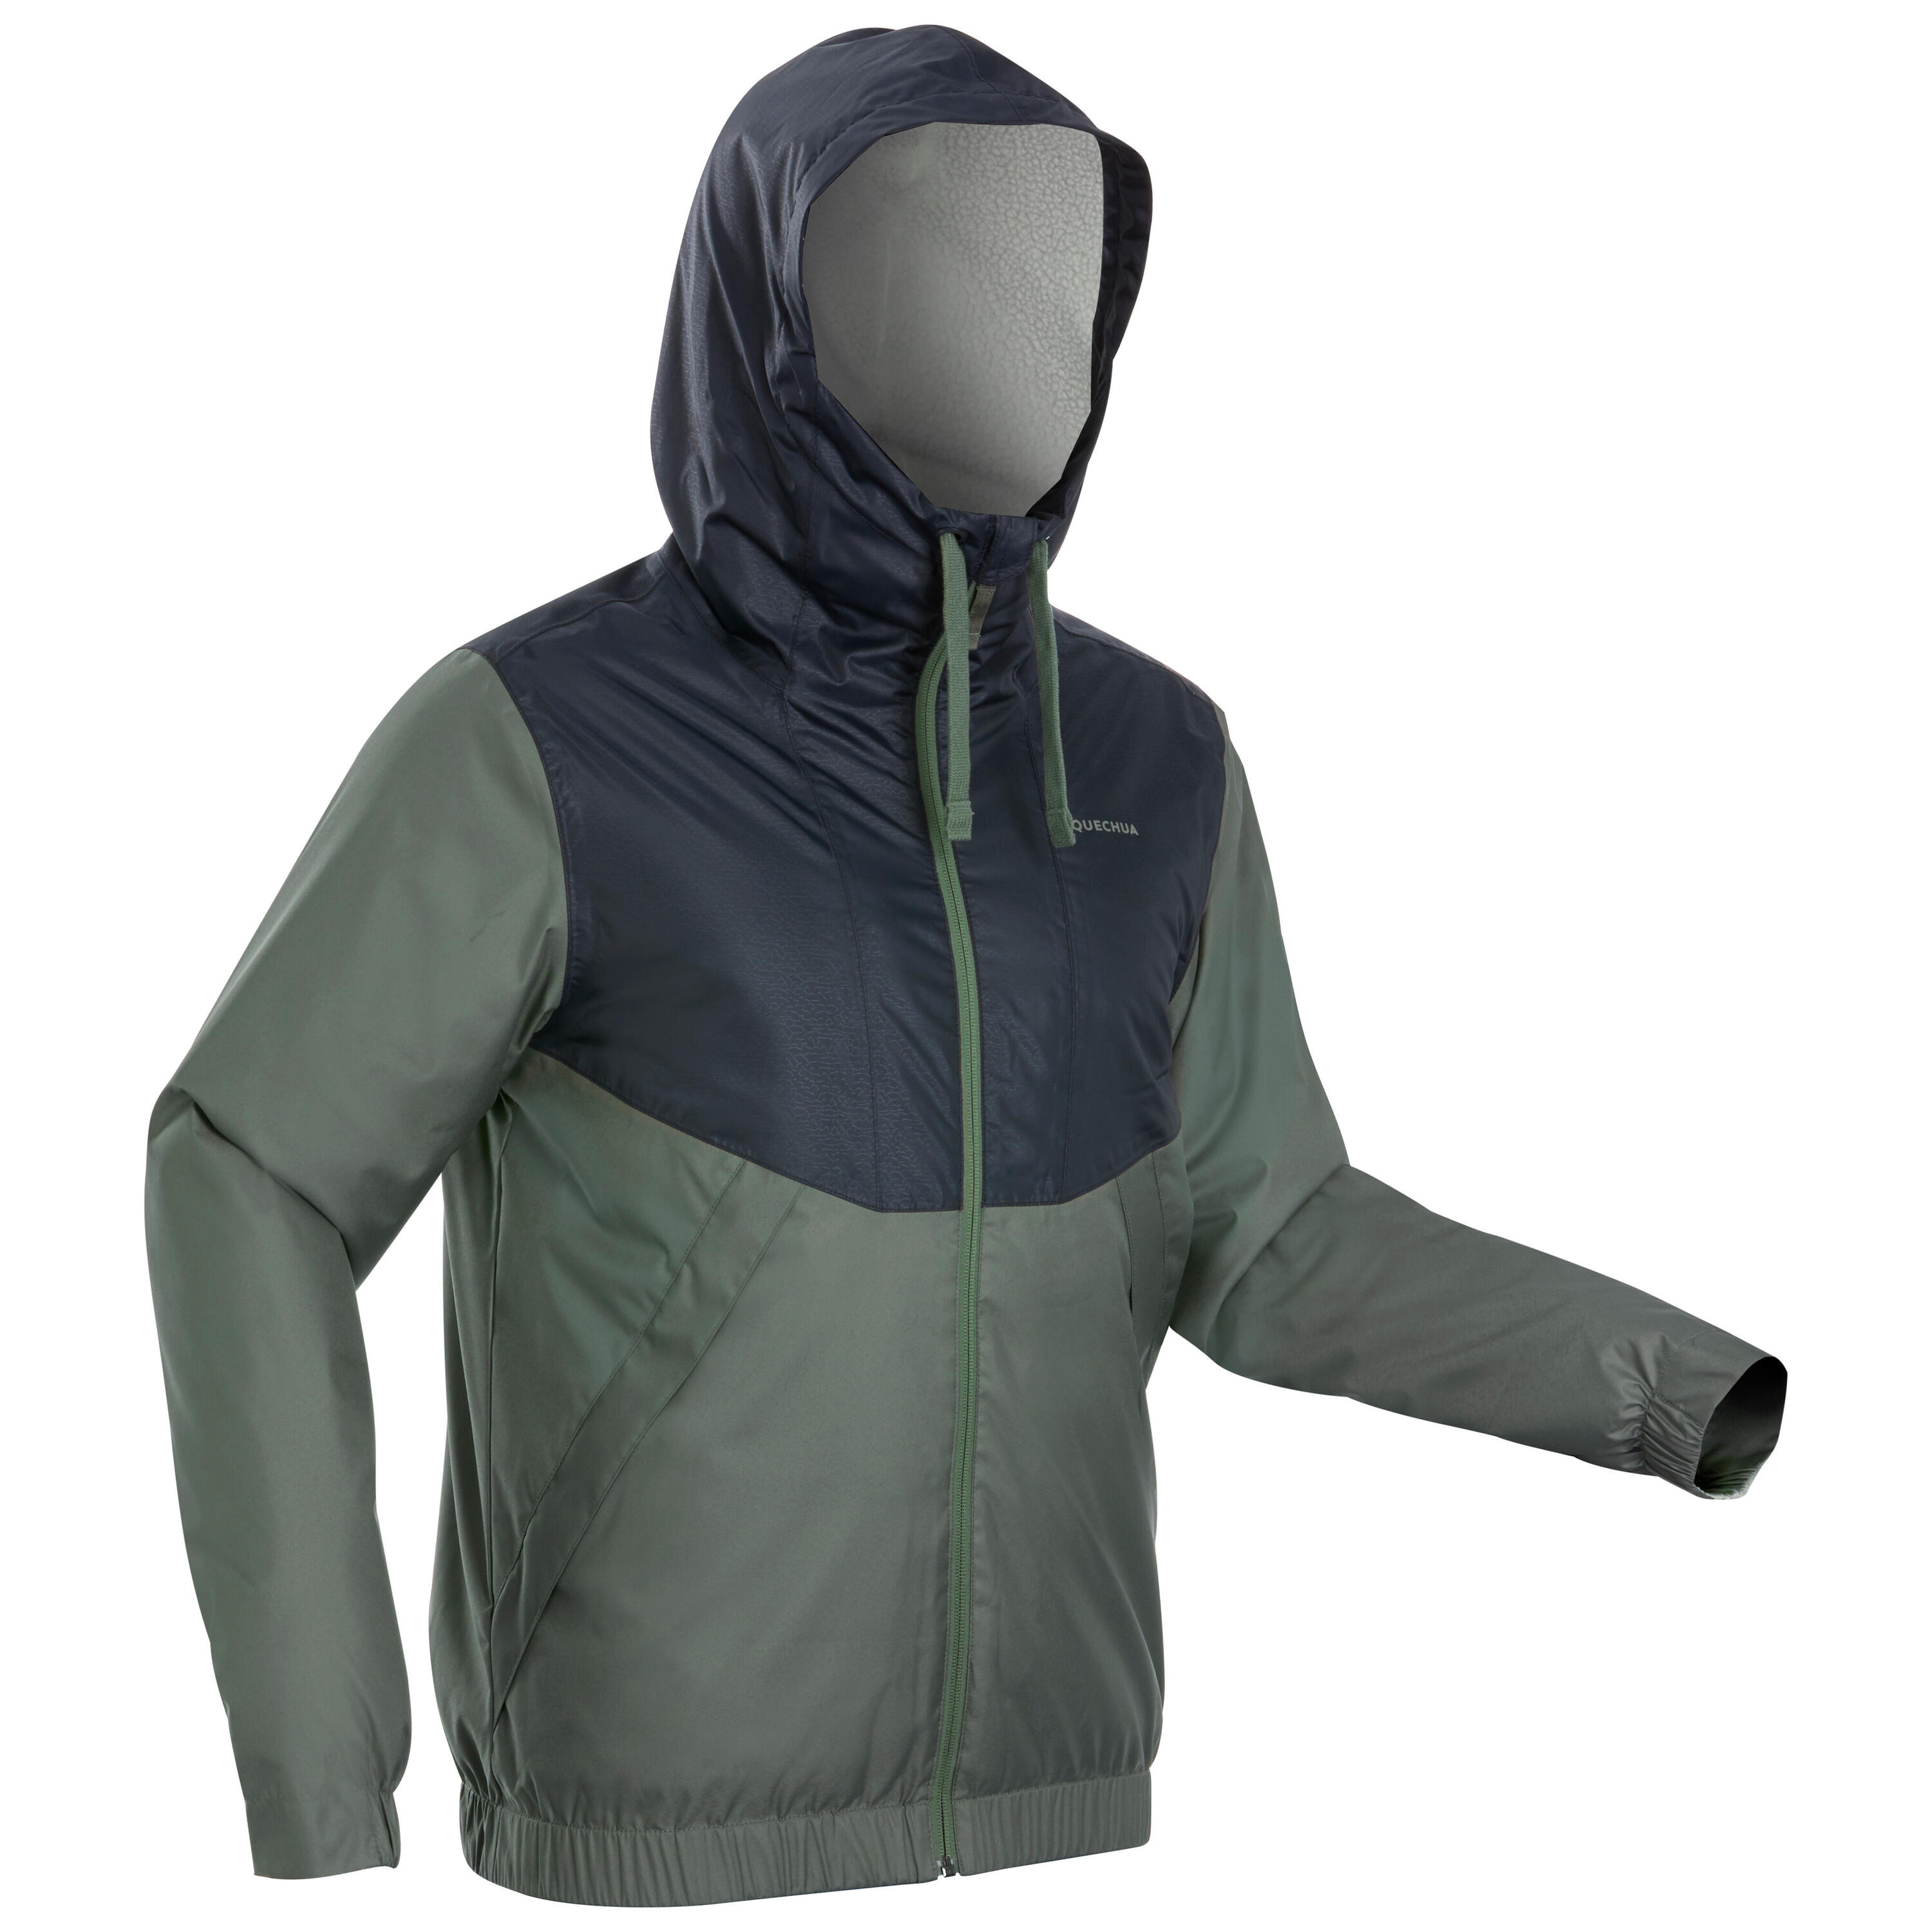 Men’s hiking waterproof winter jacket - SH100 -5°C 4/10